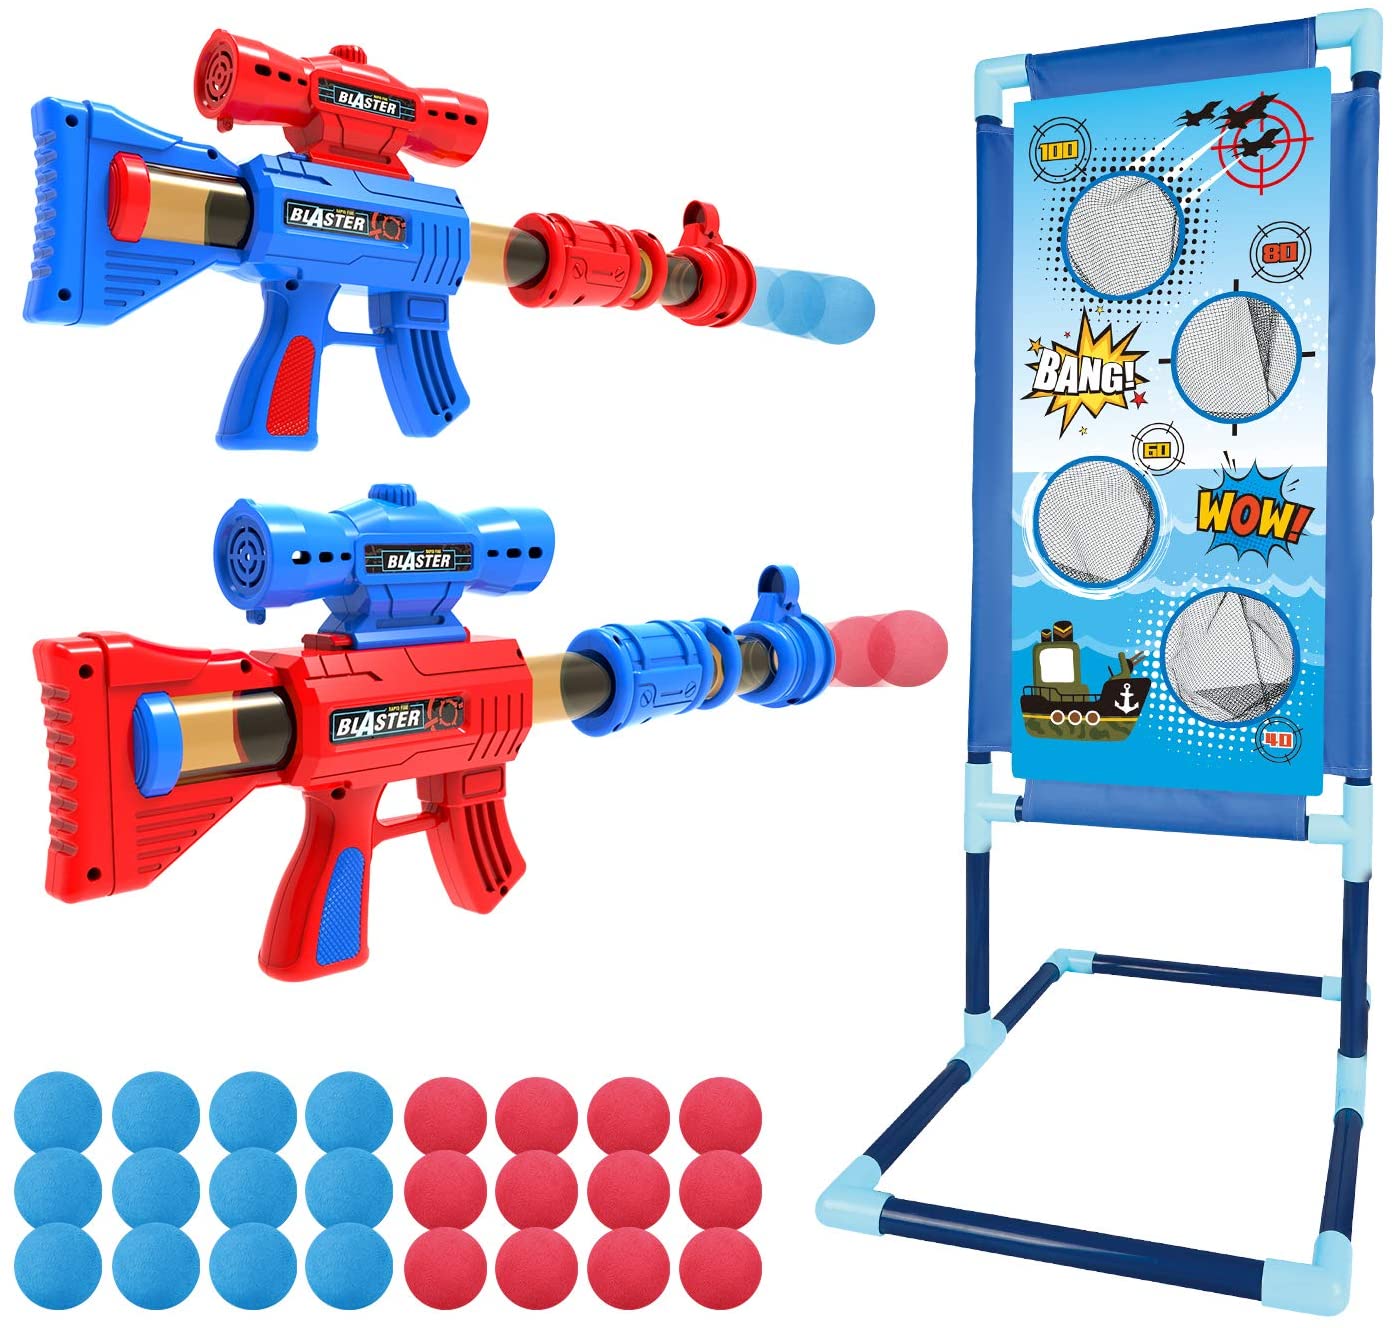 YEEBAY Pump Air Gun Game 7-Year-Old Boys’ Toy